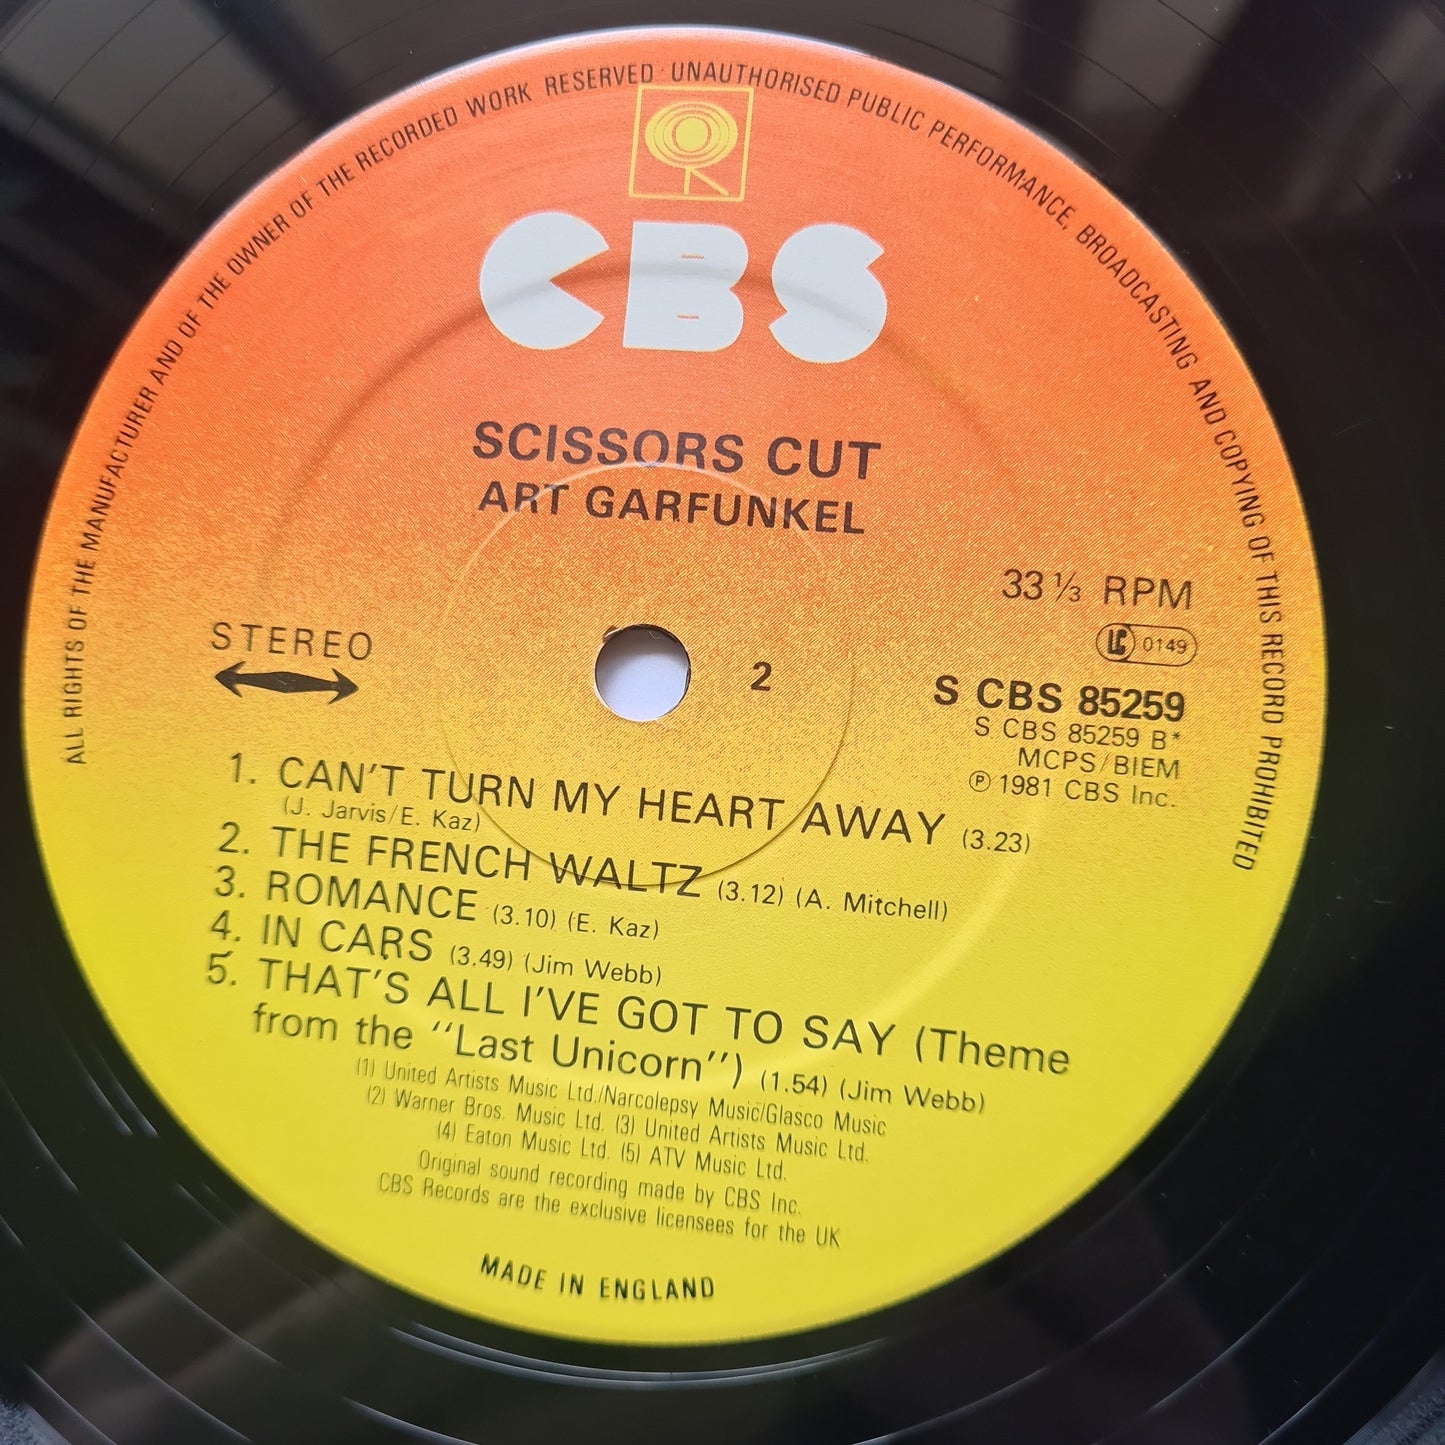 Art Garfunkel – Scissors Cut - 1981 - Vinyl Record